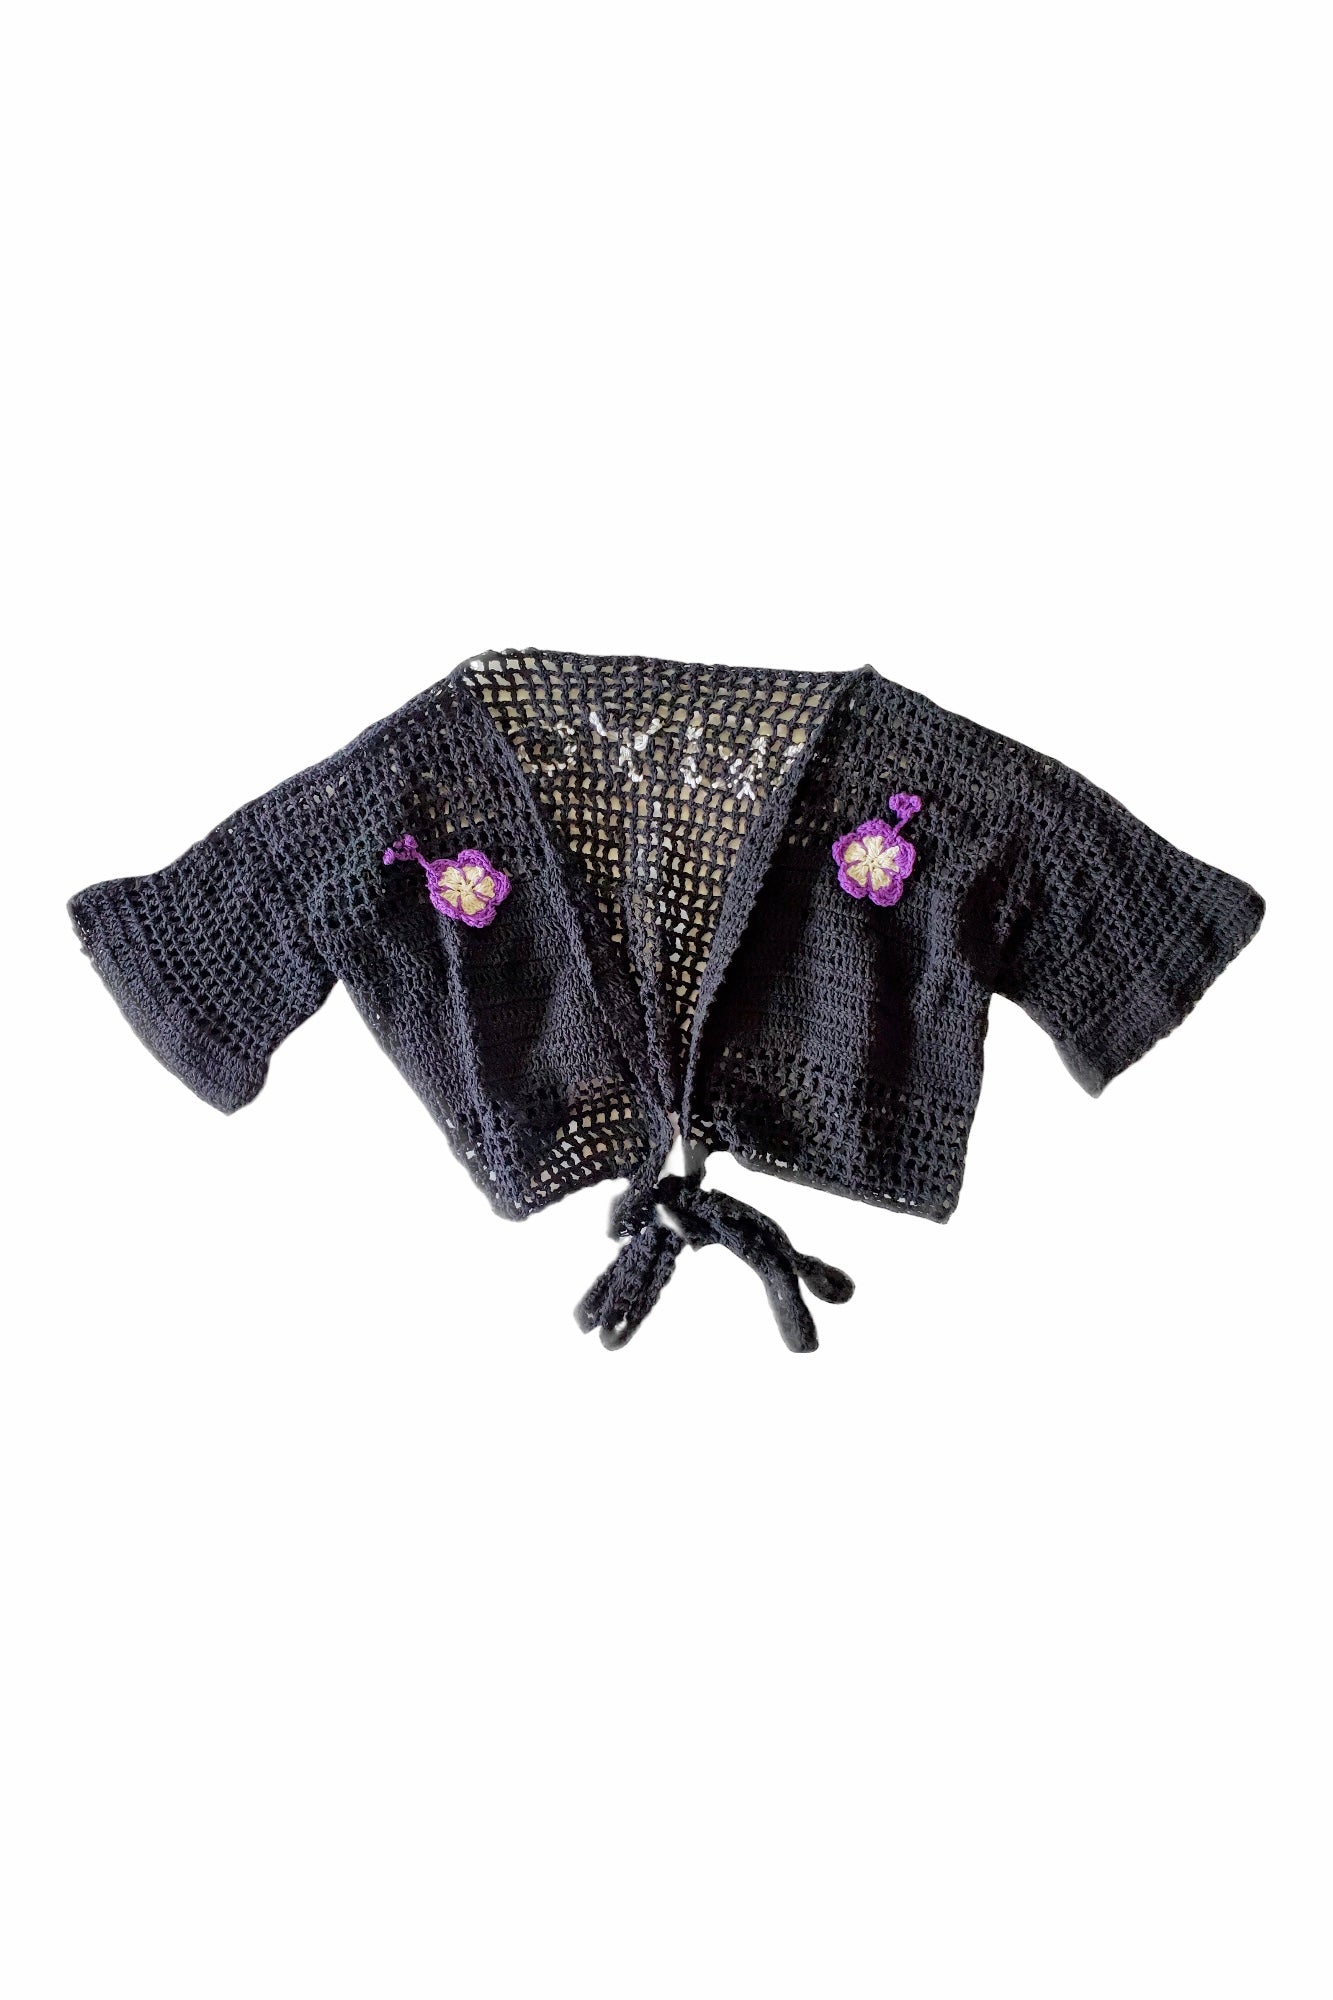 TIKIYOGI Iconic Flower Black Crochet Bolero, Handmade.